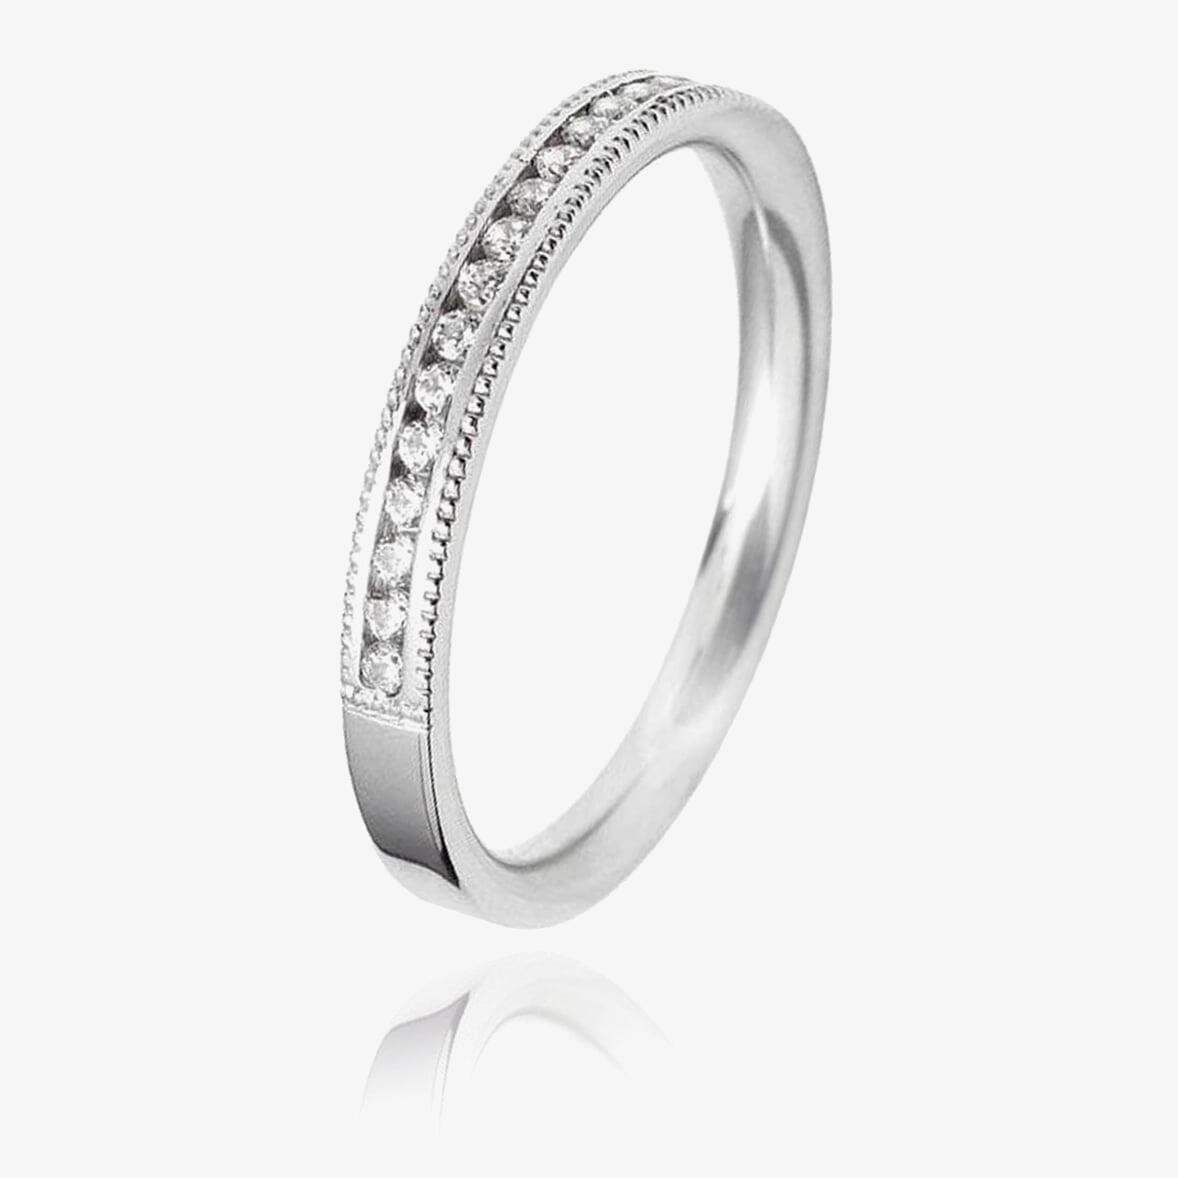 18ct White Gold 3.0mm Vintage Diamond Flat Court Wedding Ring WVGH7/3R125 18W HSI-M